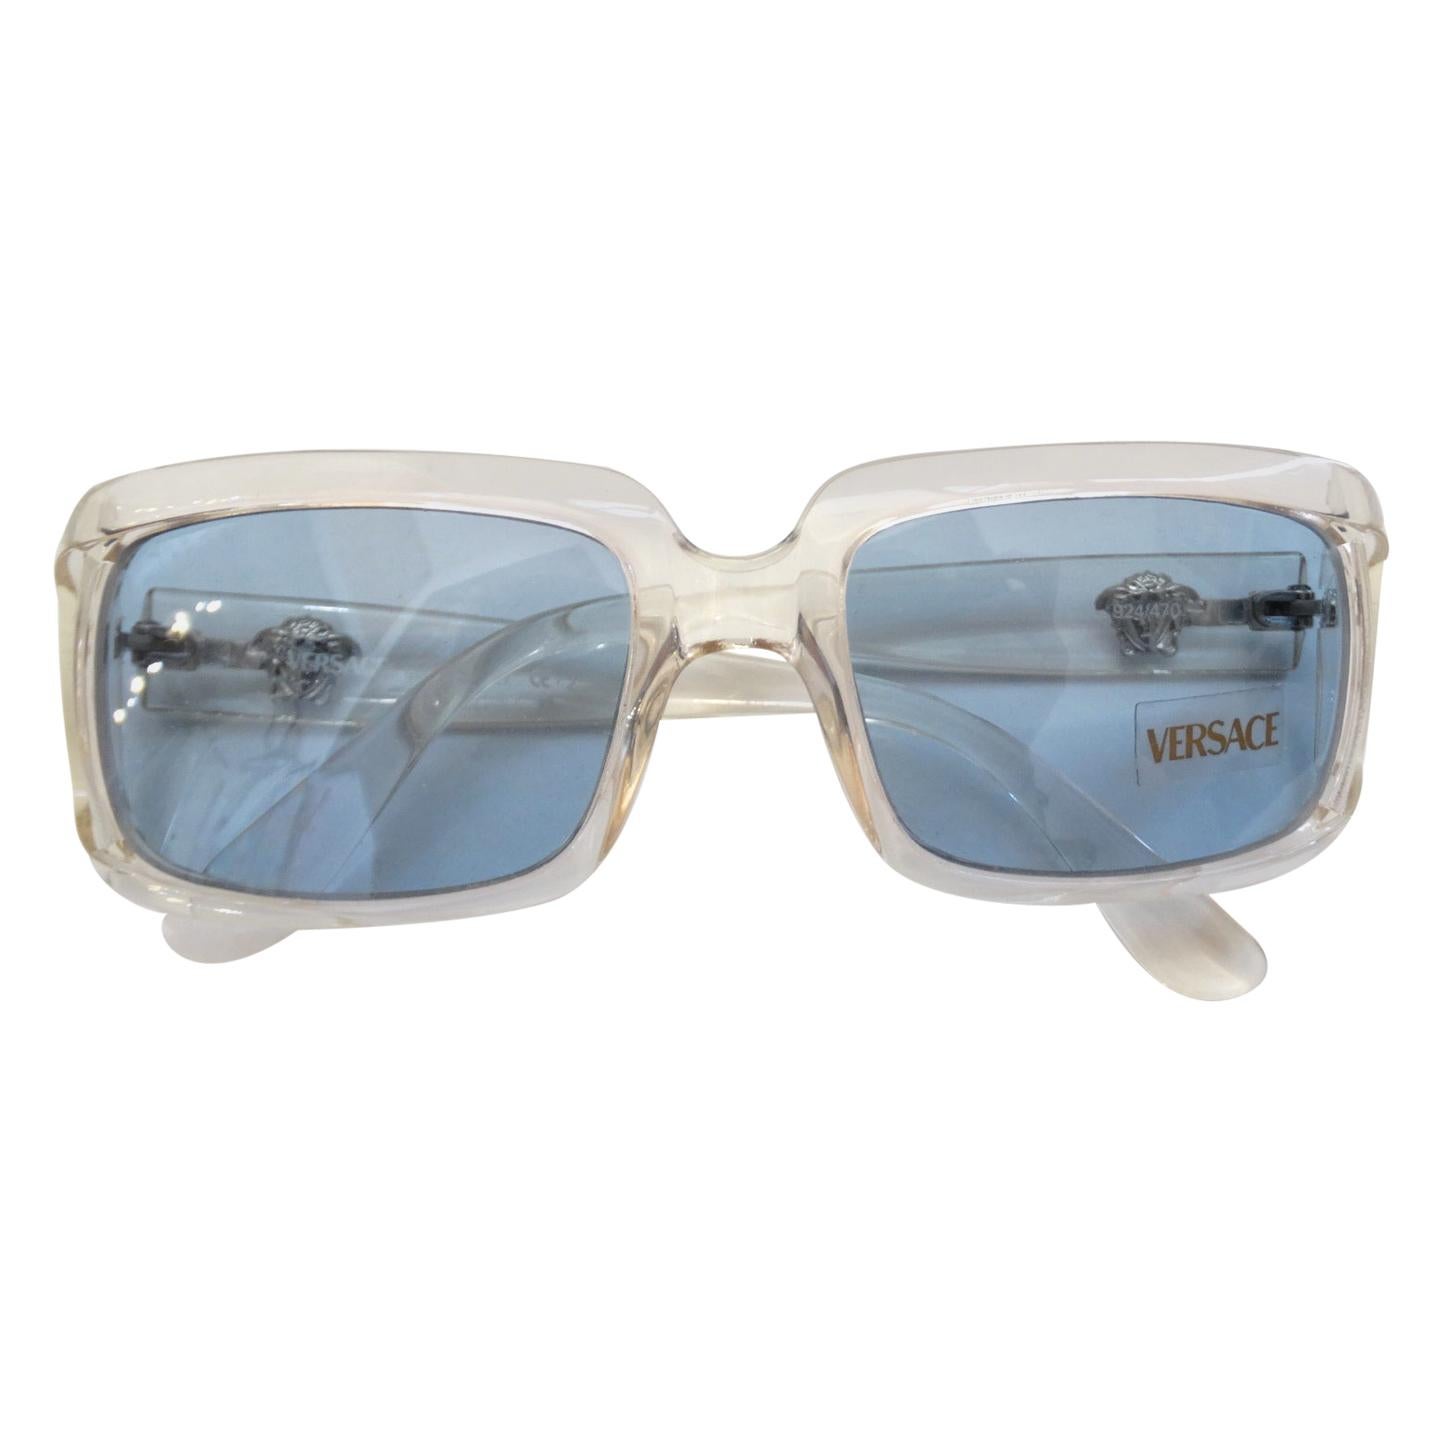 Versace 1990s Clear Rectangular Frame Sunglasses